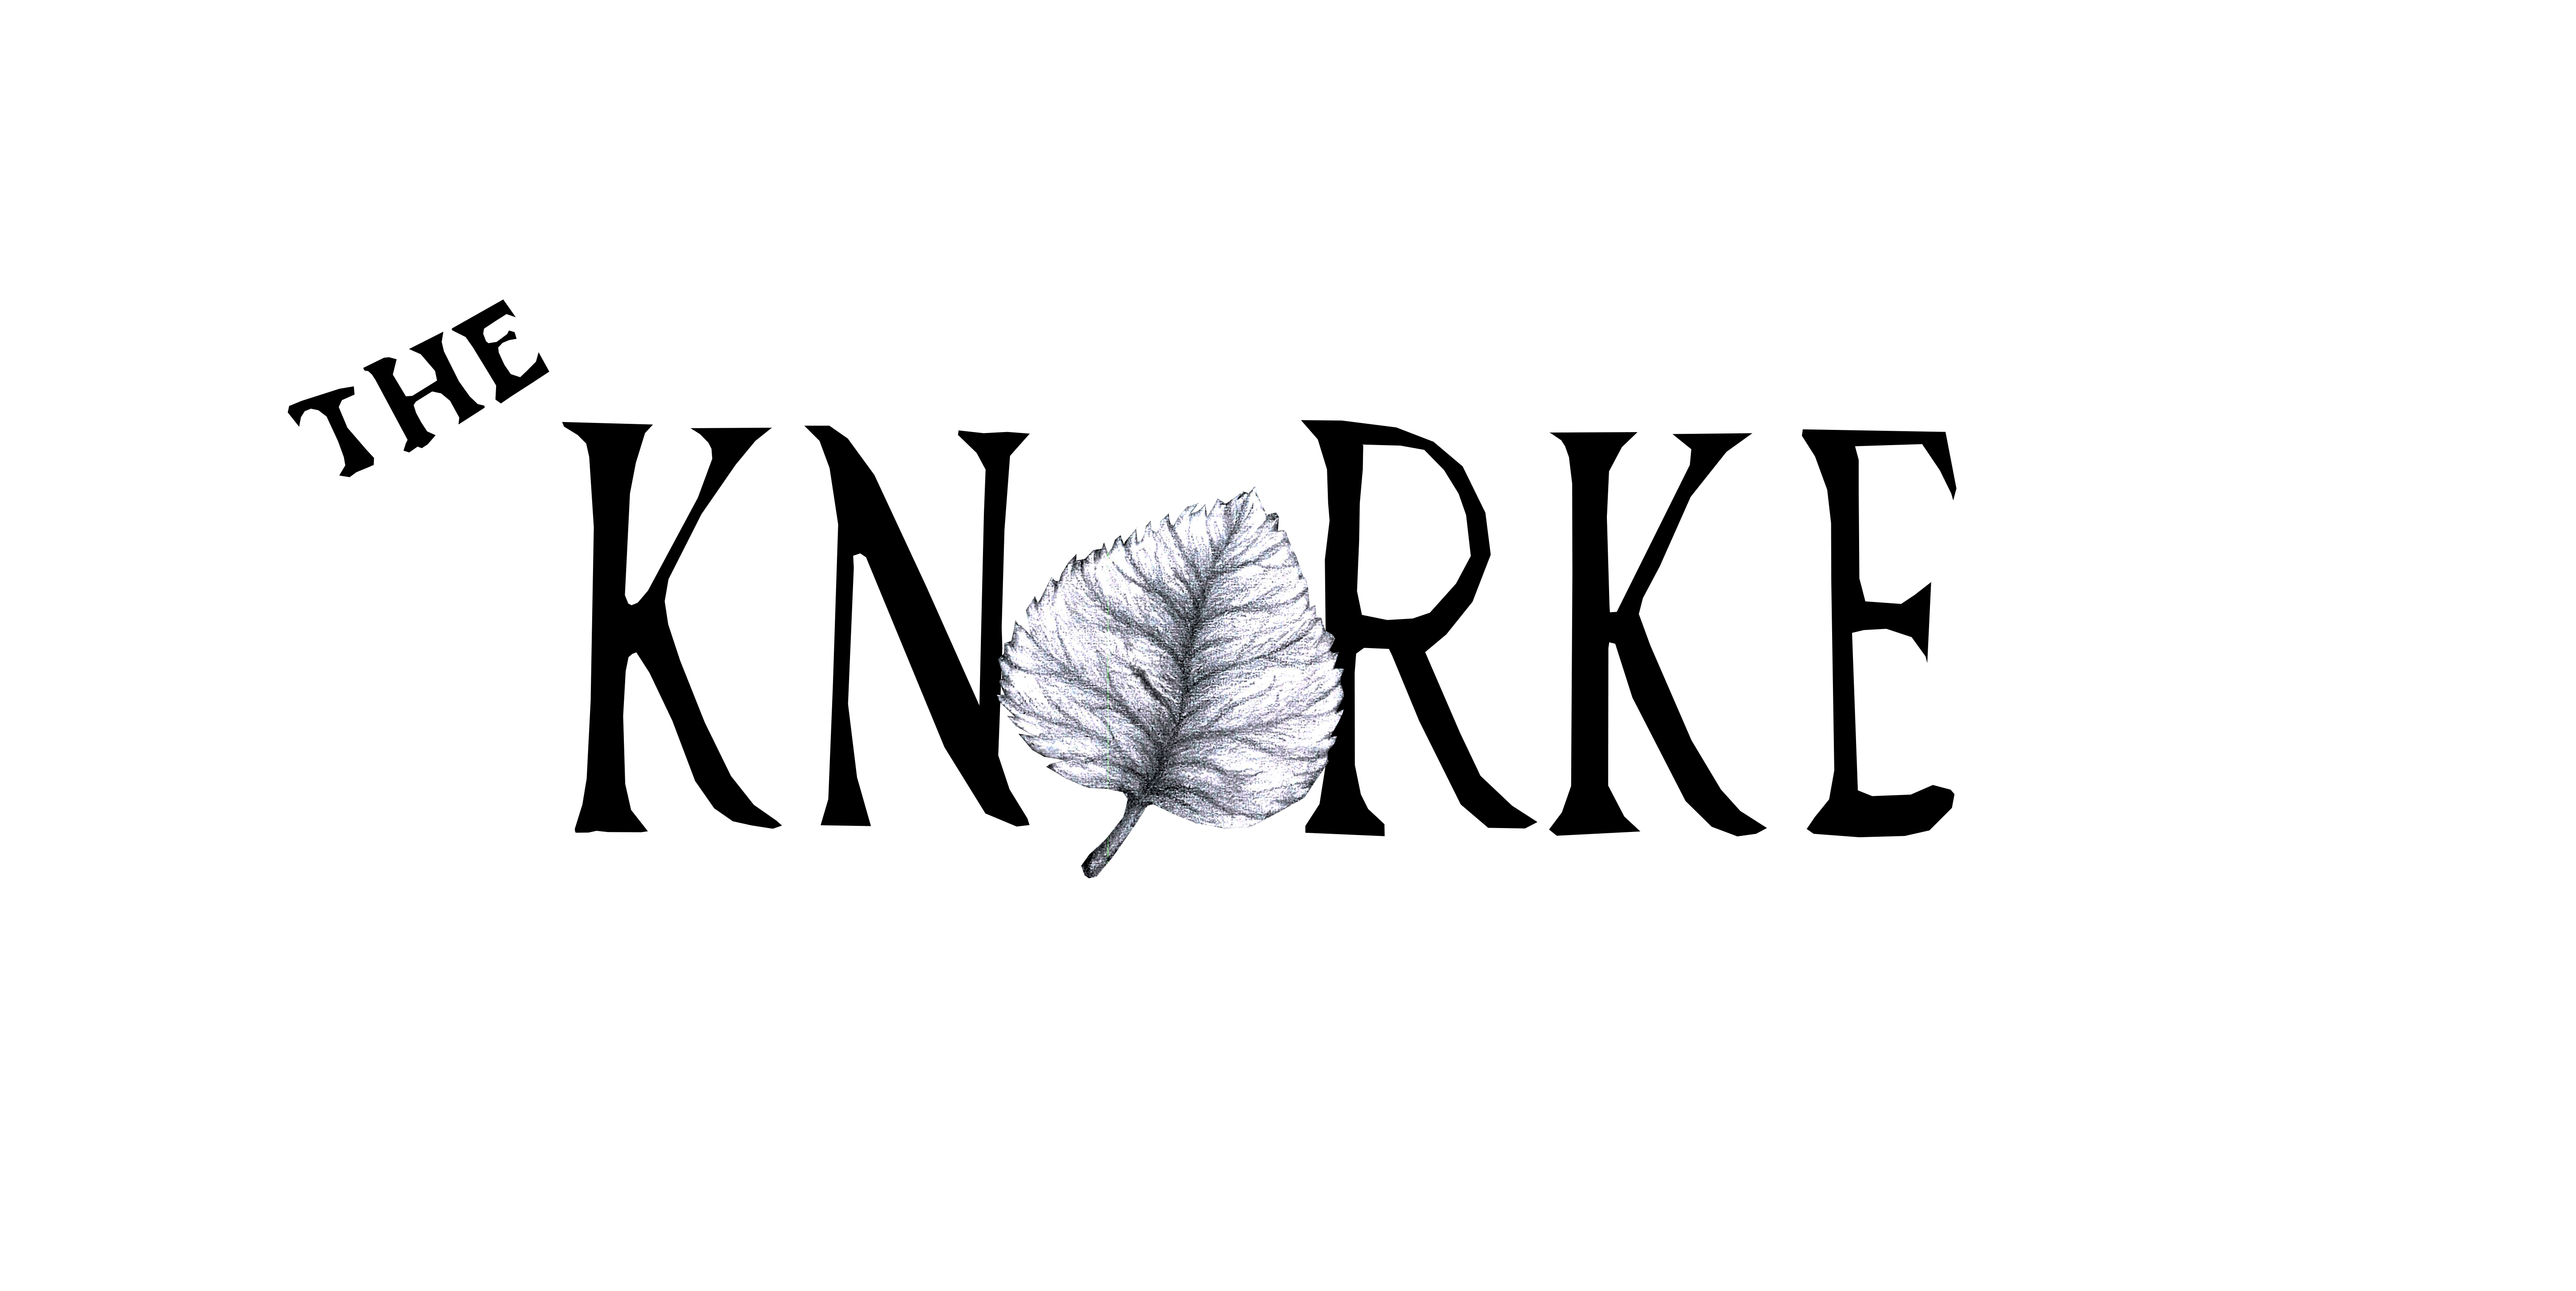 The Knorke